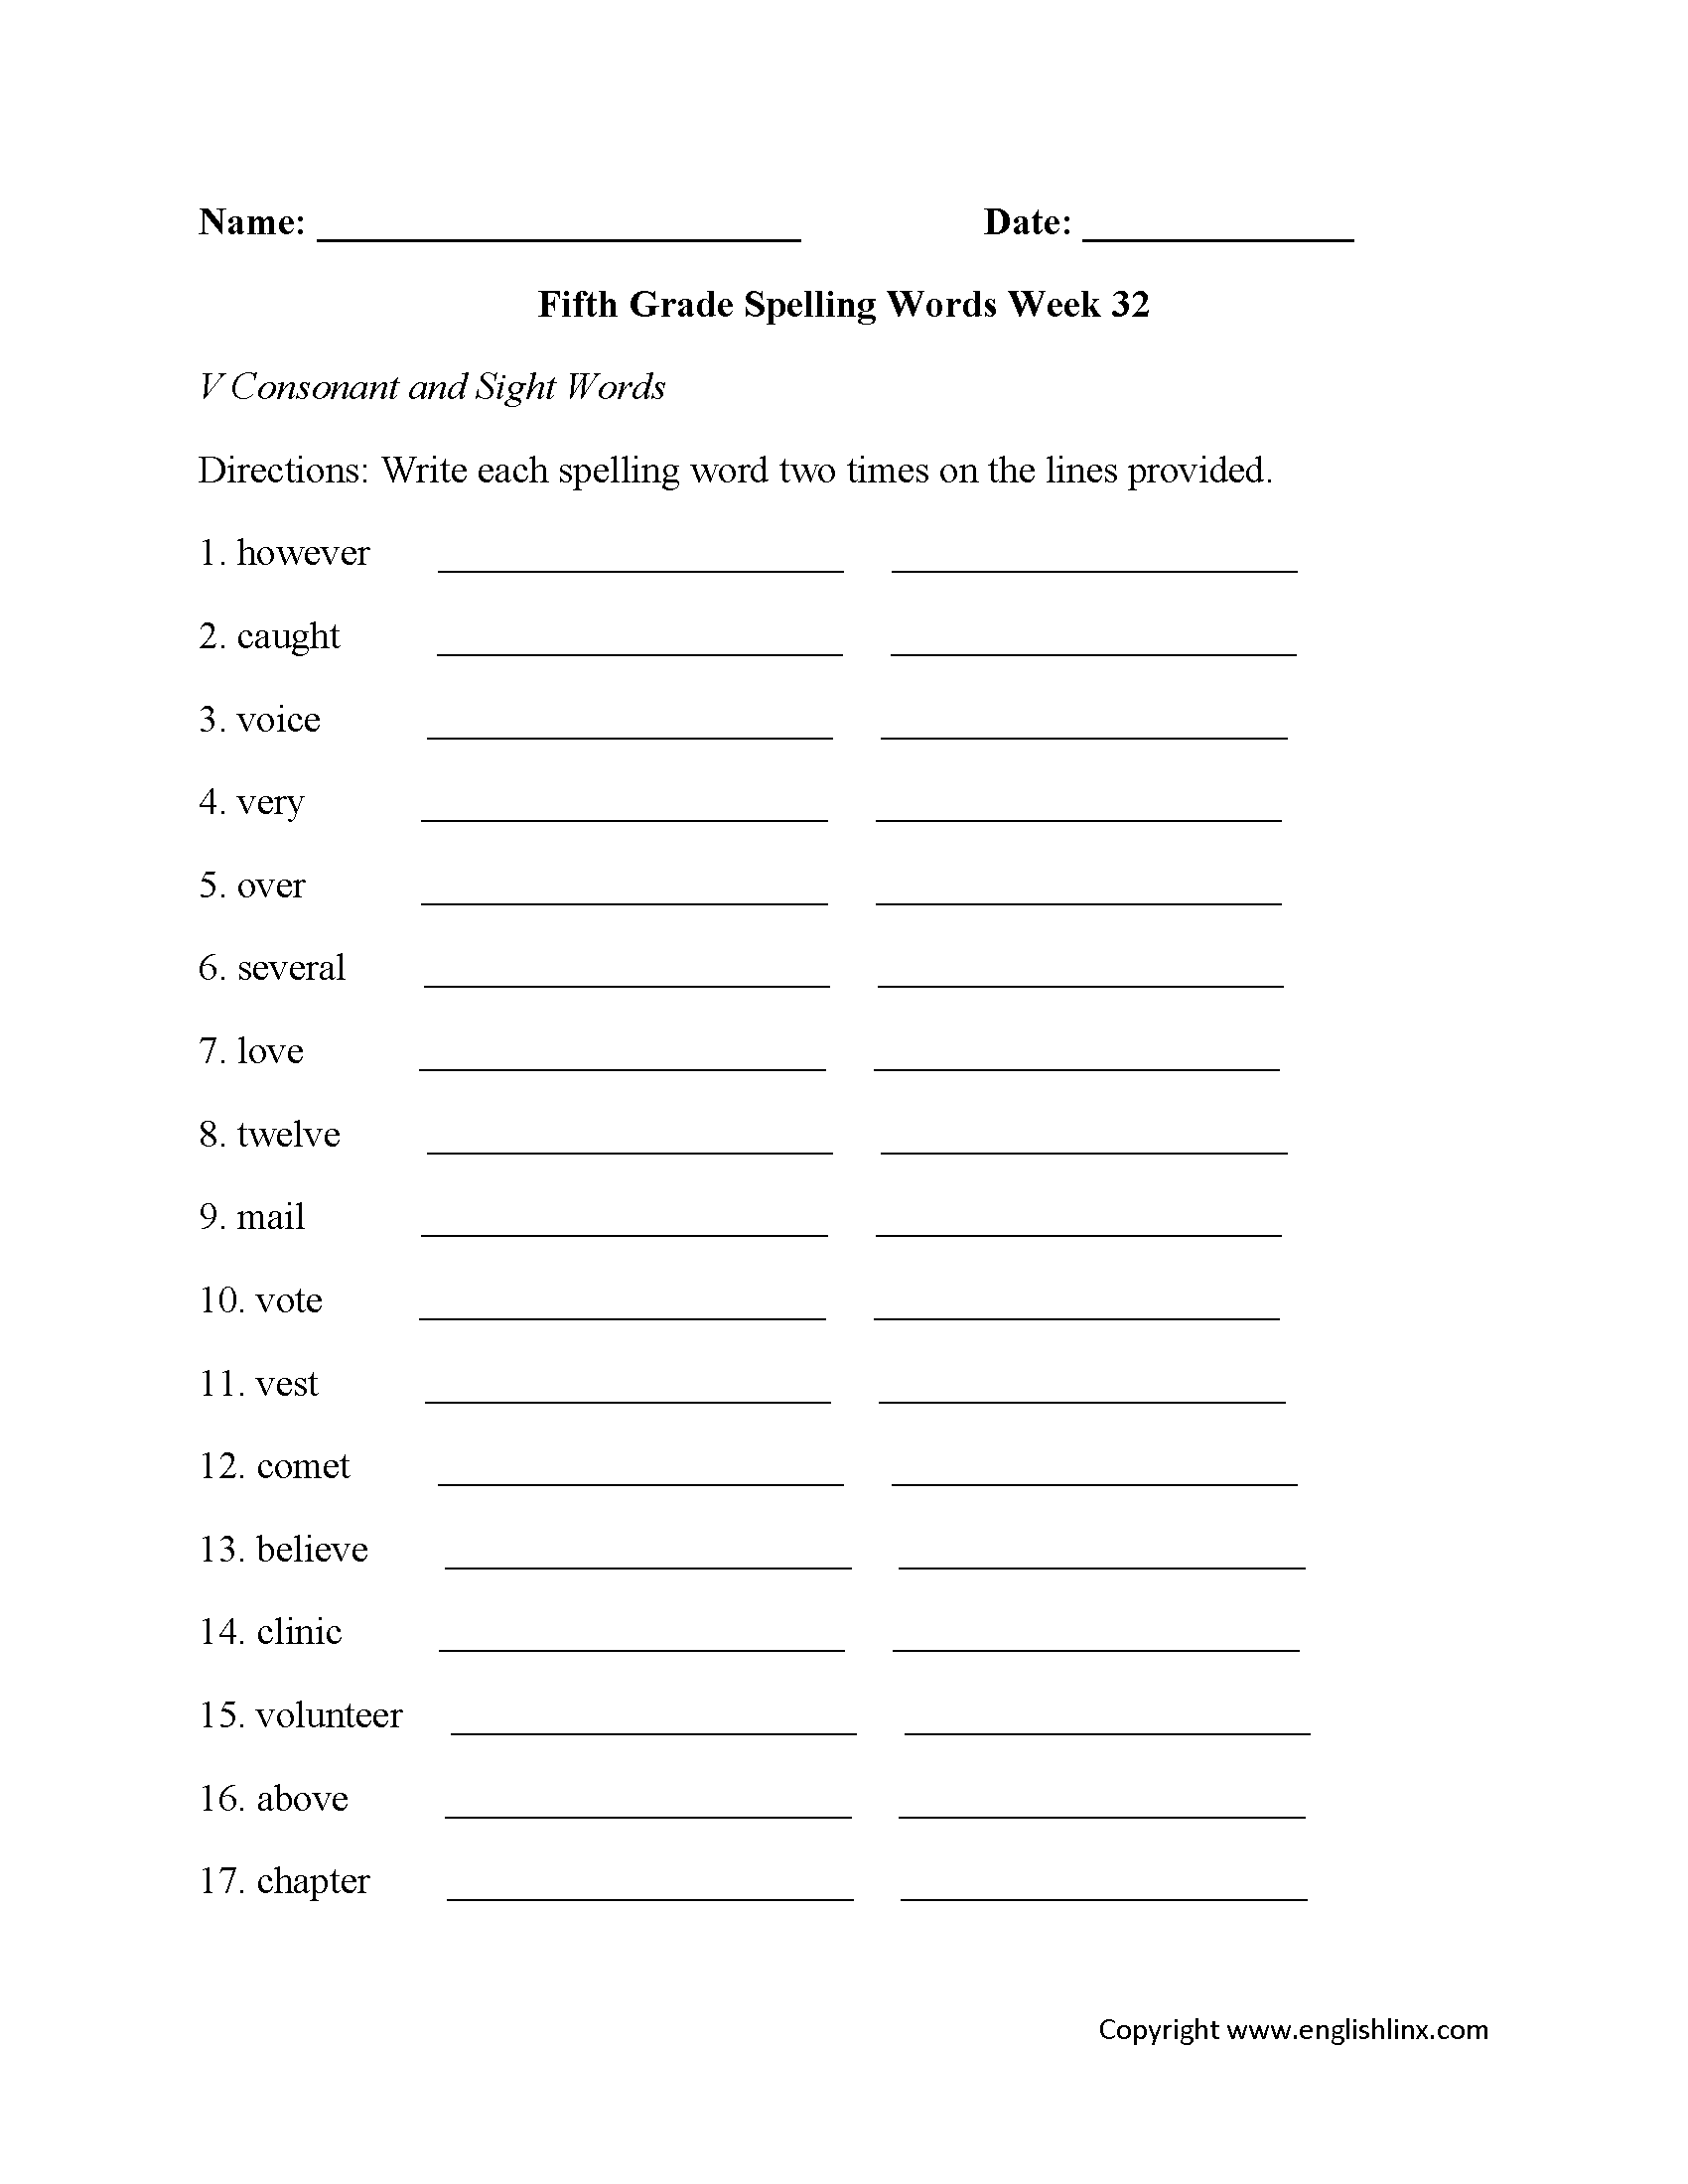 Spelling Worksheets | Fifth Grade Spelling Worksheets